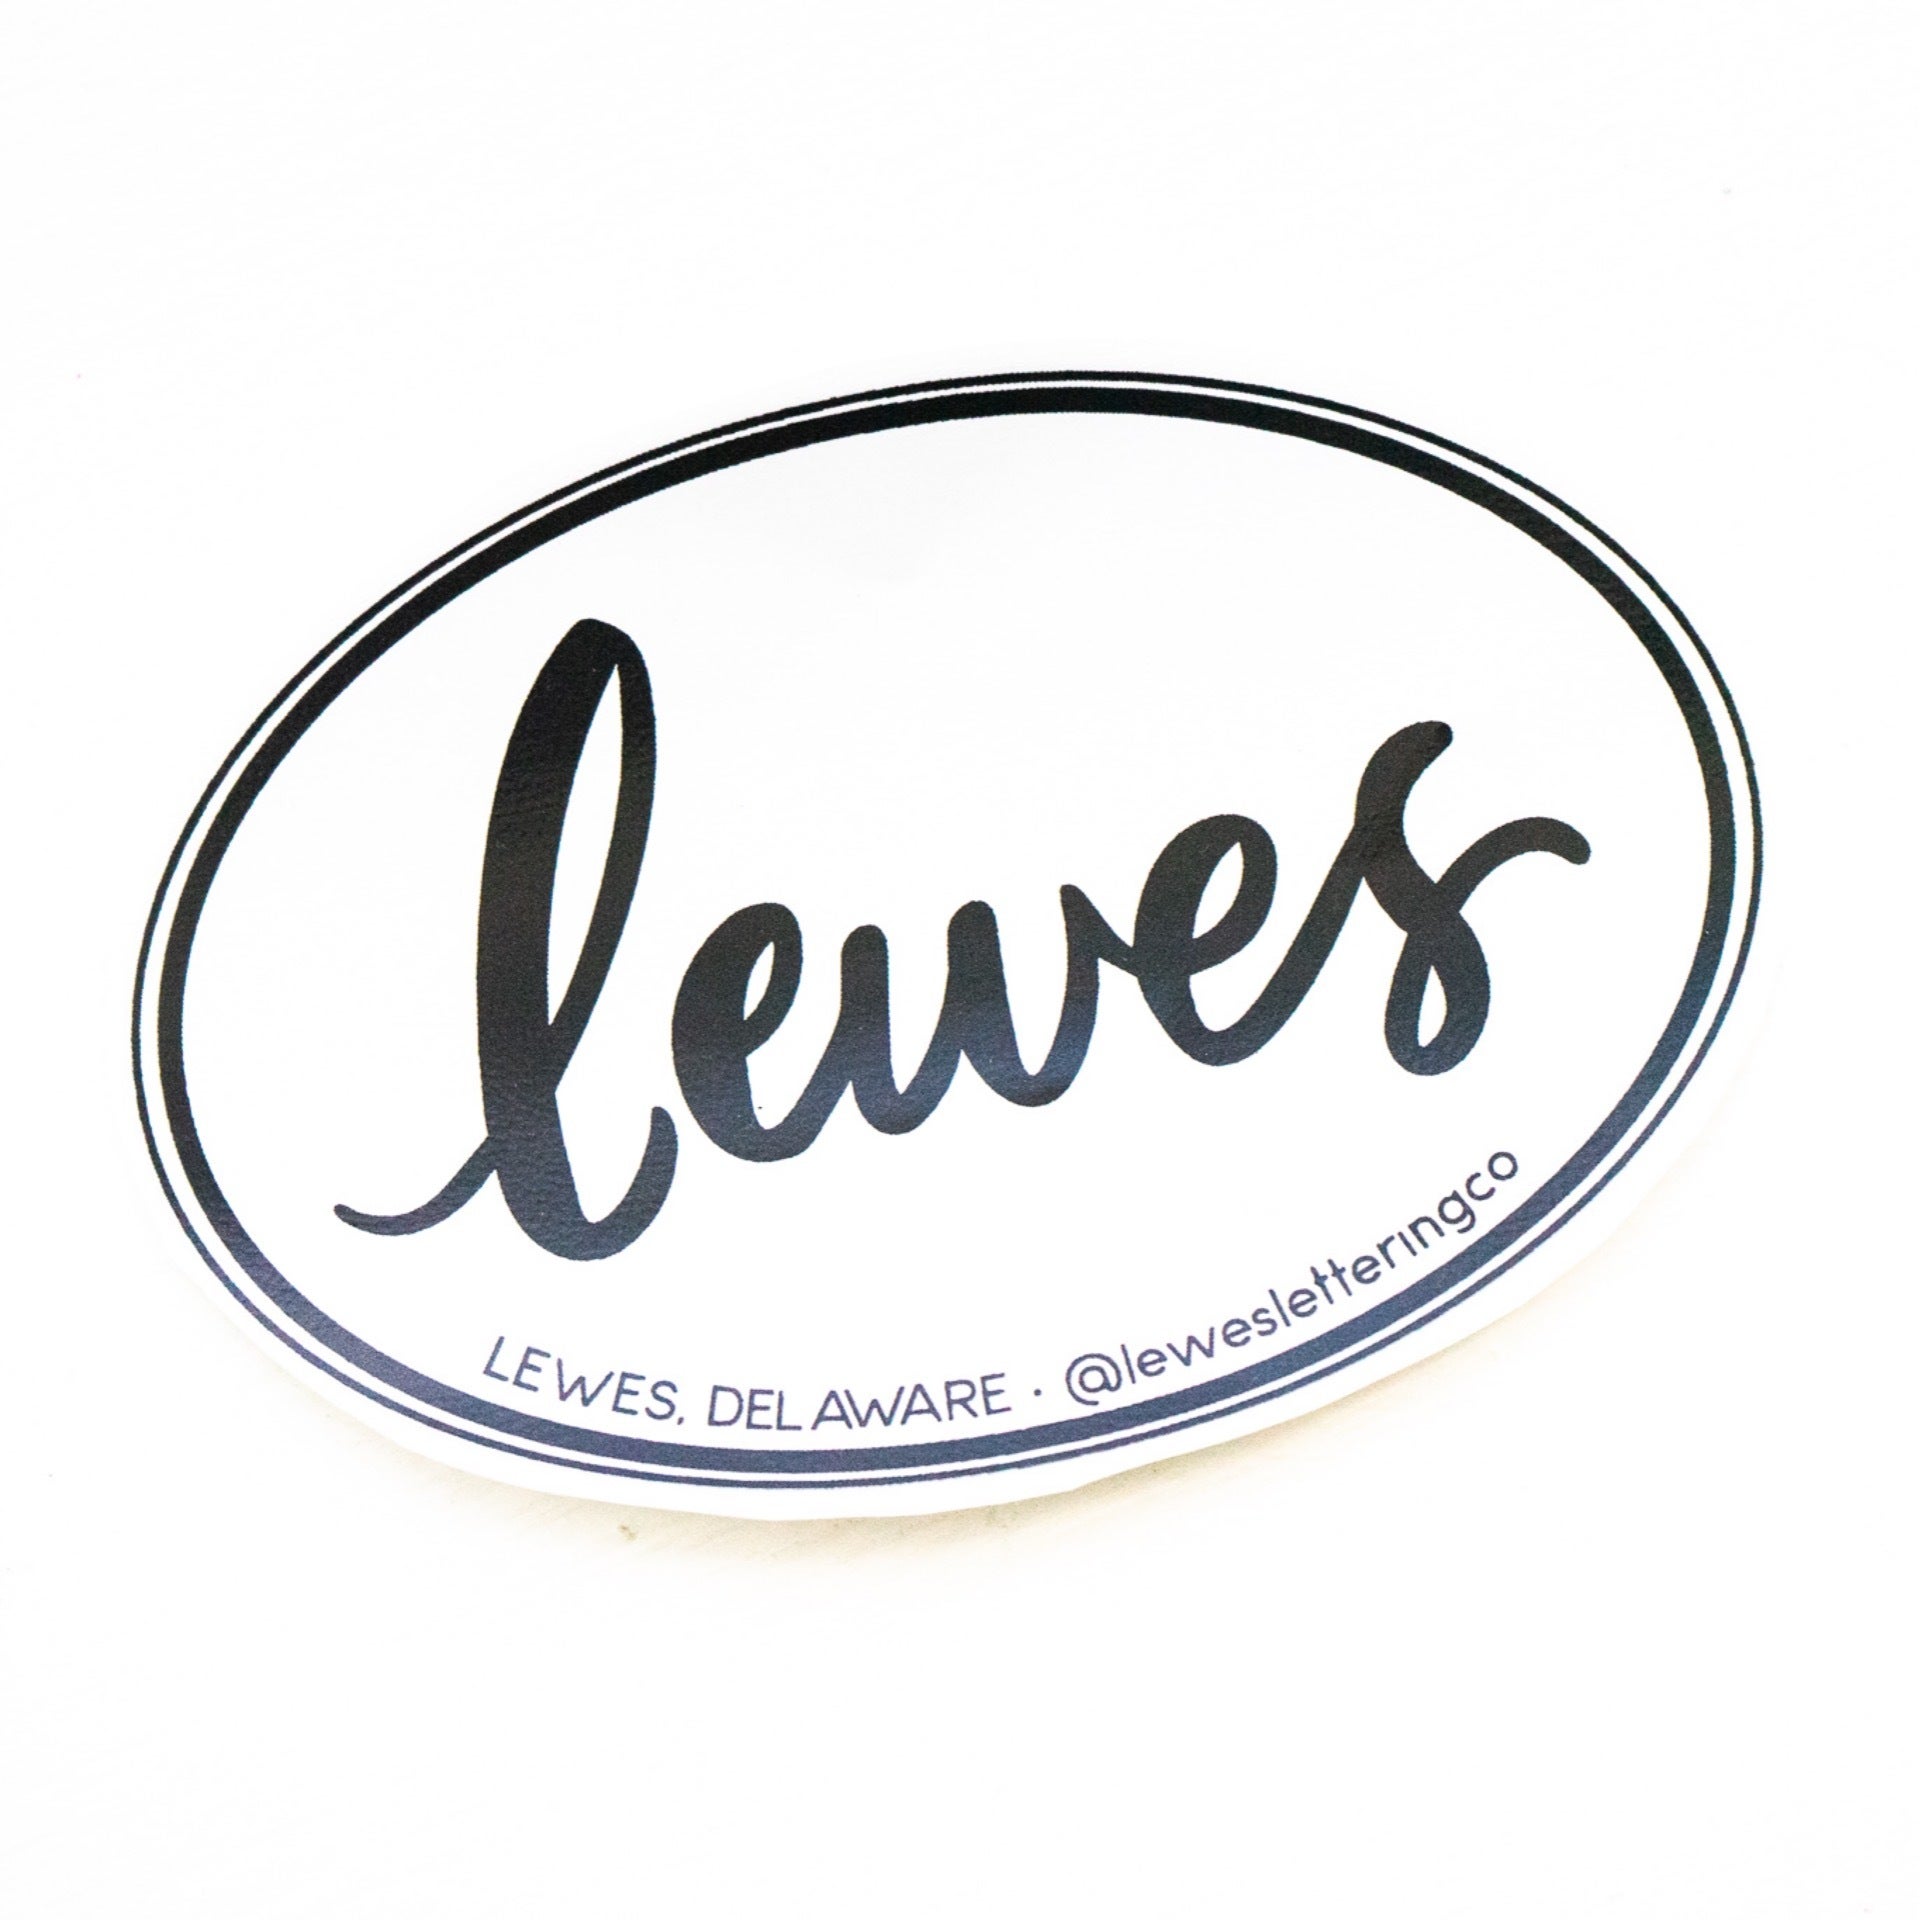 Lewes Sticker  Lewes Lettering Co.